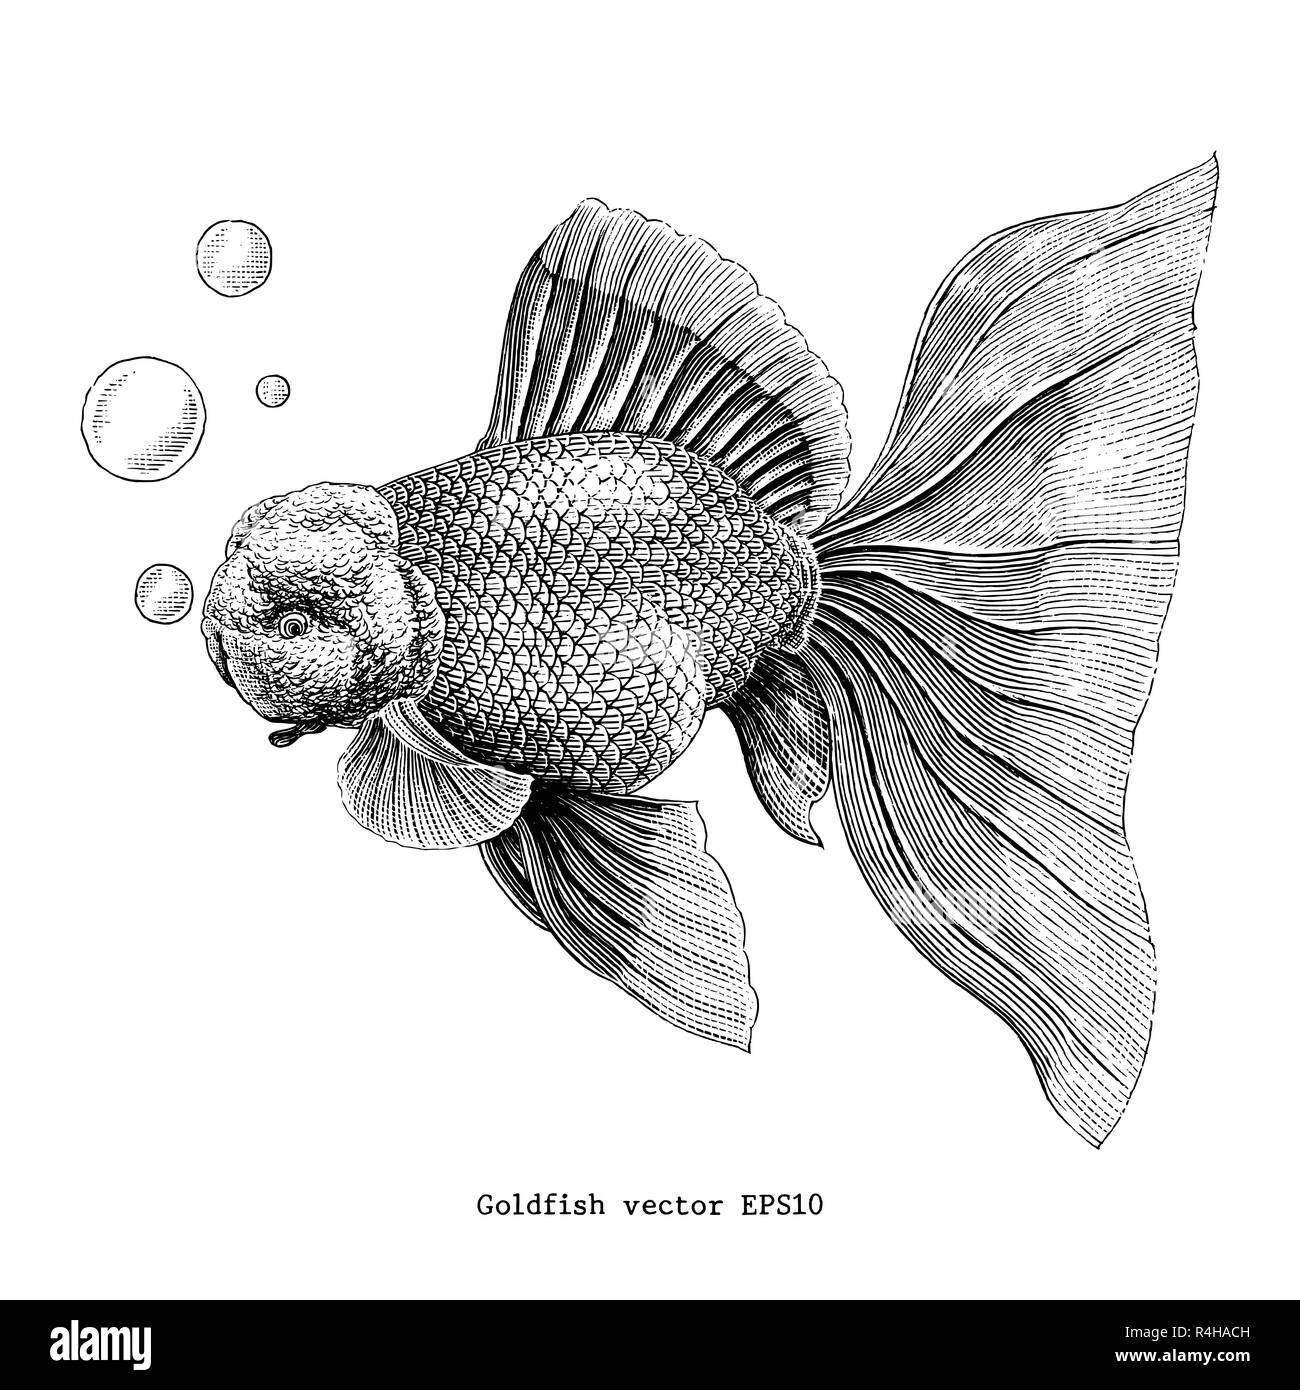 Goldfish hand drawing vintage engraving illustration Stock Vector